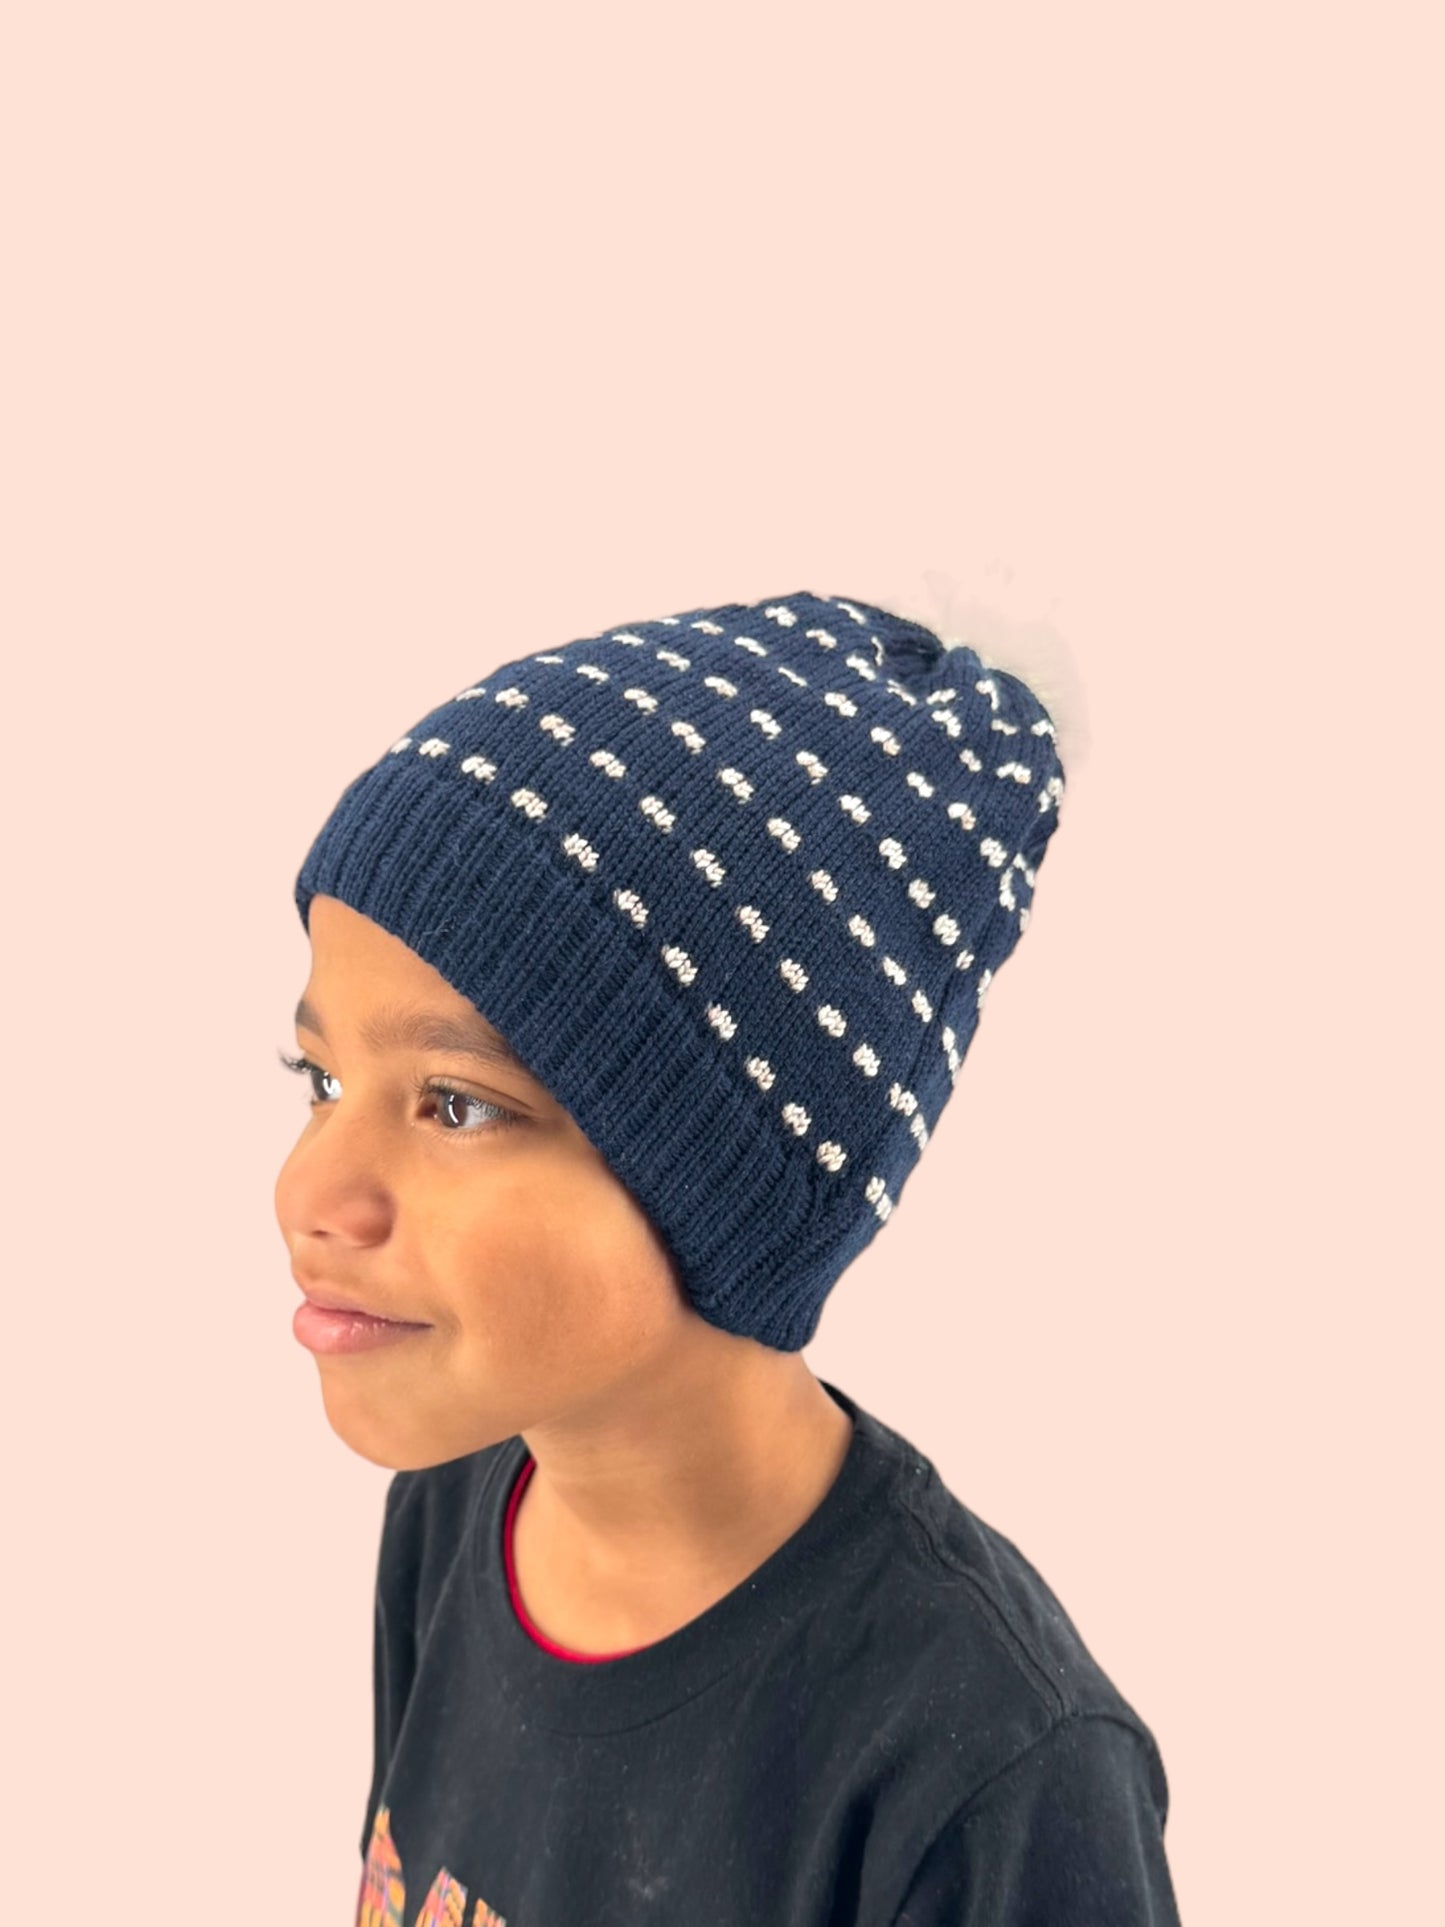 Kids Knit Hat